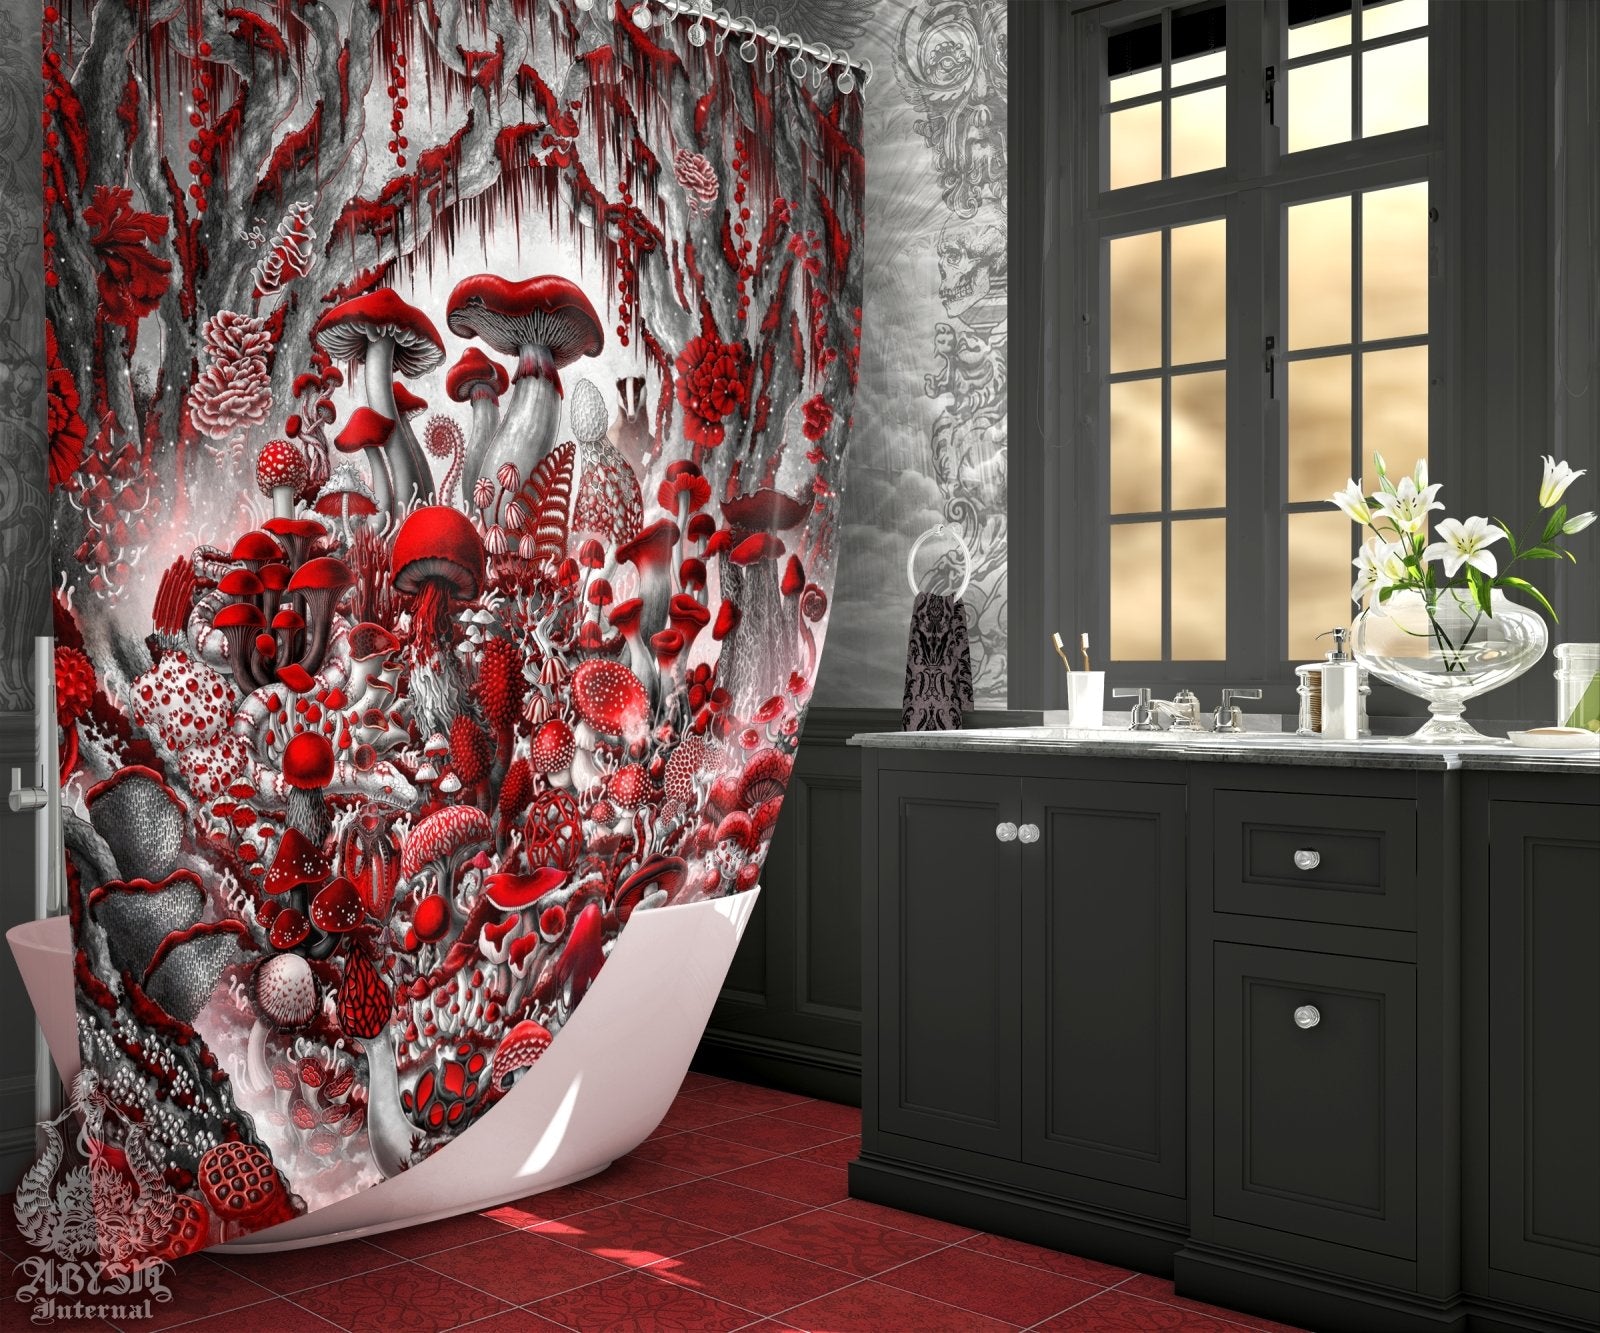 Gothic Mushrooms Shower Curtain, Dark Bathroom Decor, Fantasy Home Art, Mycology Print - Magic Shrooms, Bloody White Goth - Abysm Internal